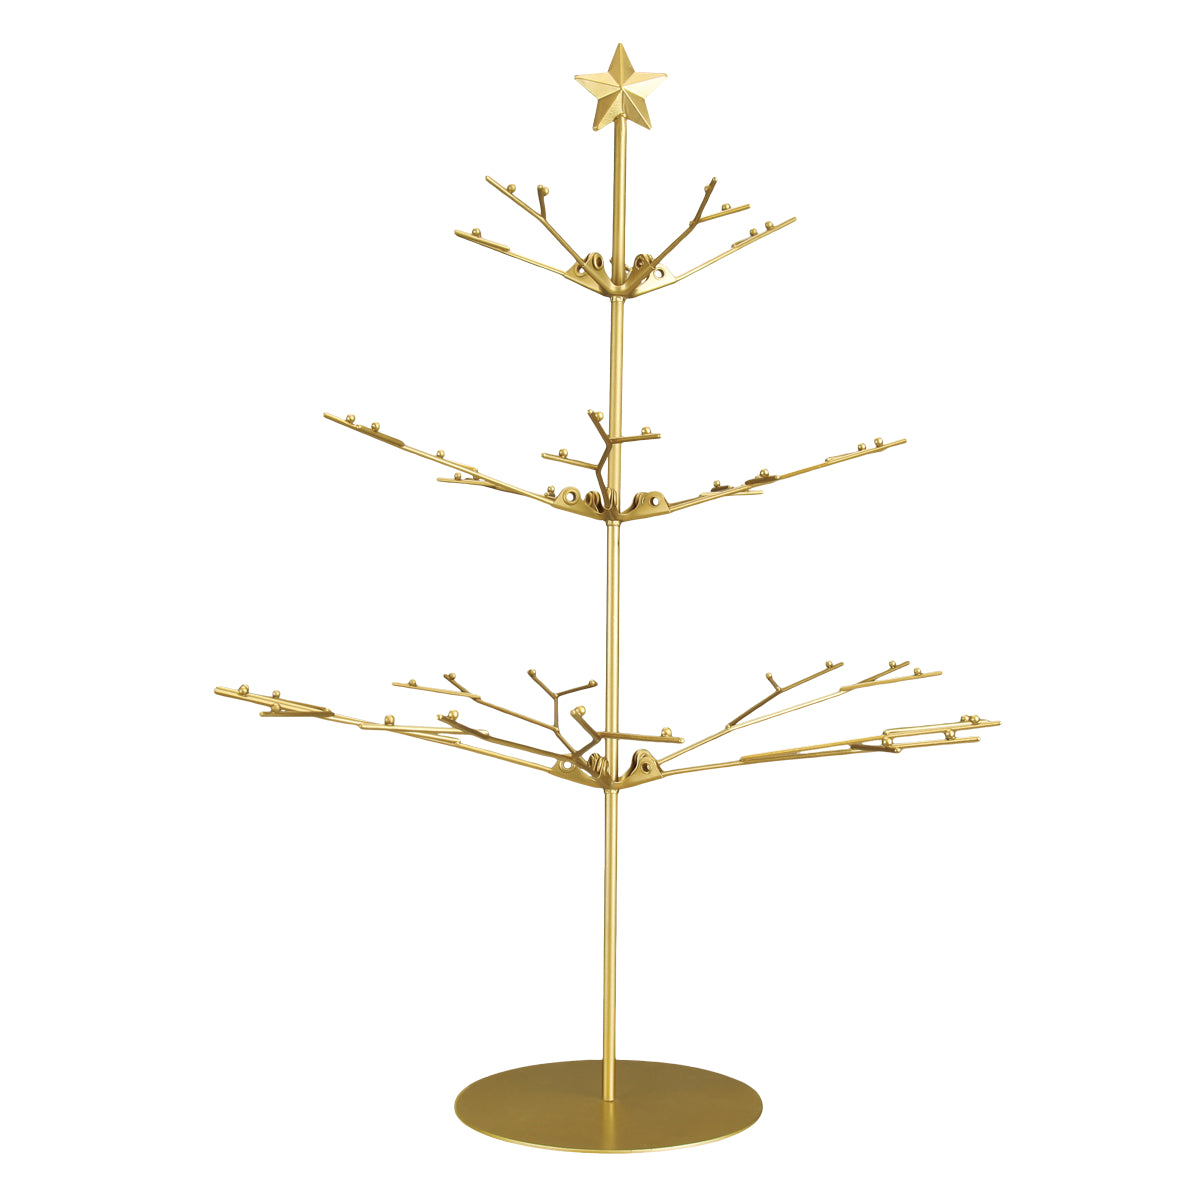 Tabletop Metal Tree Display Ornament